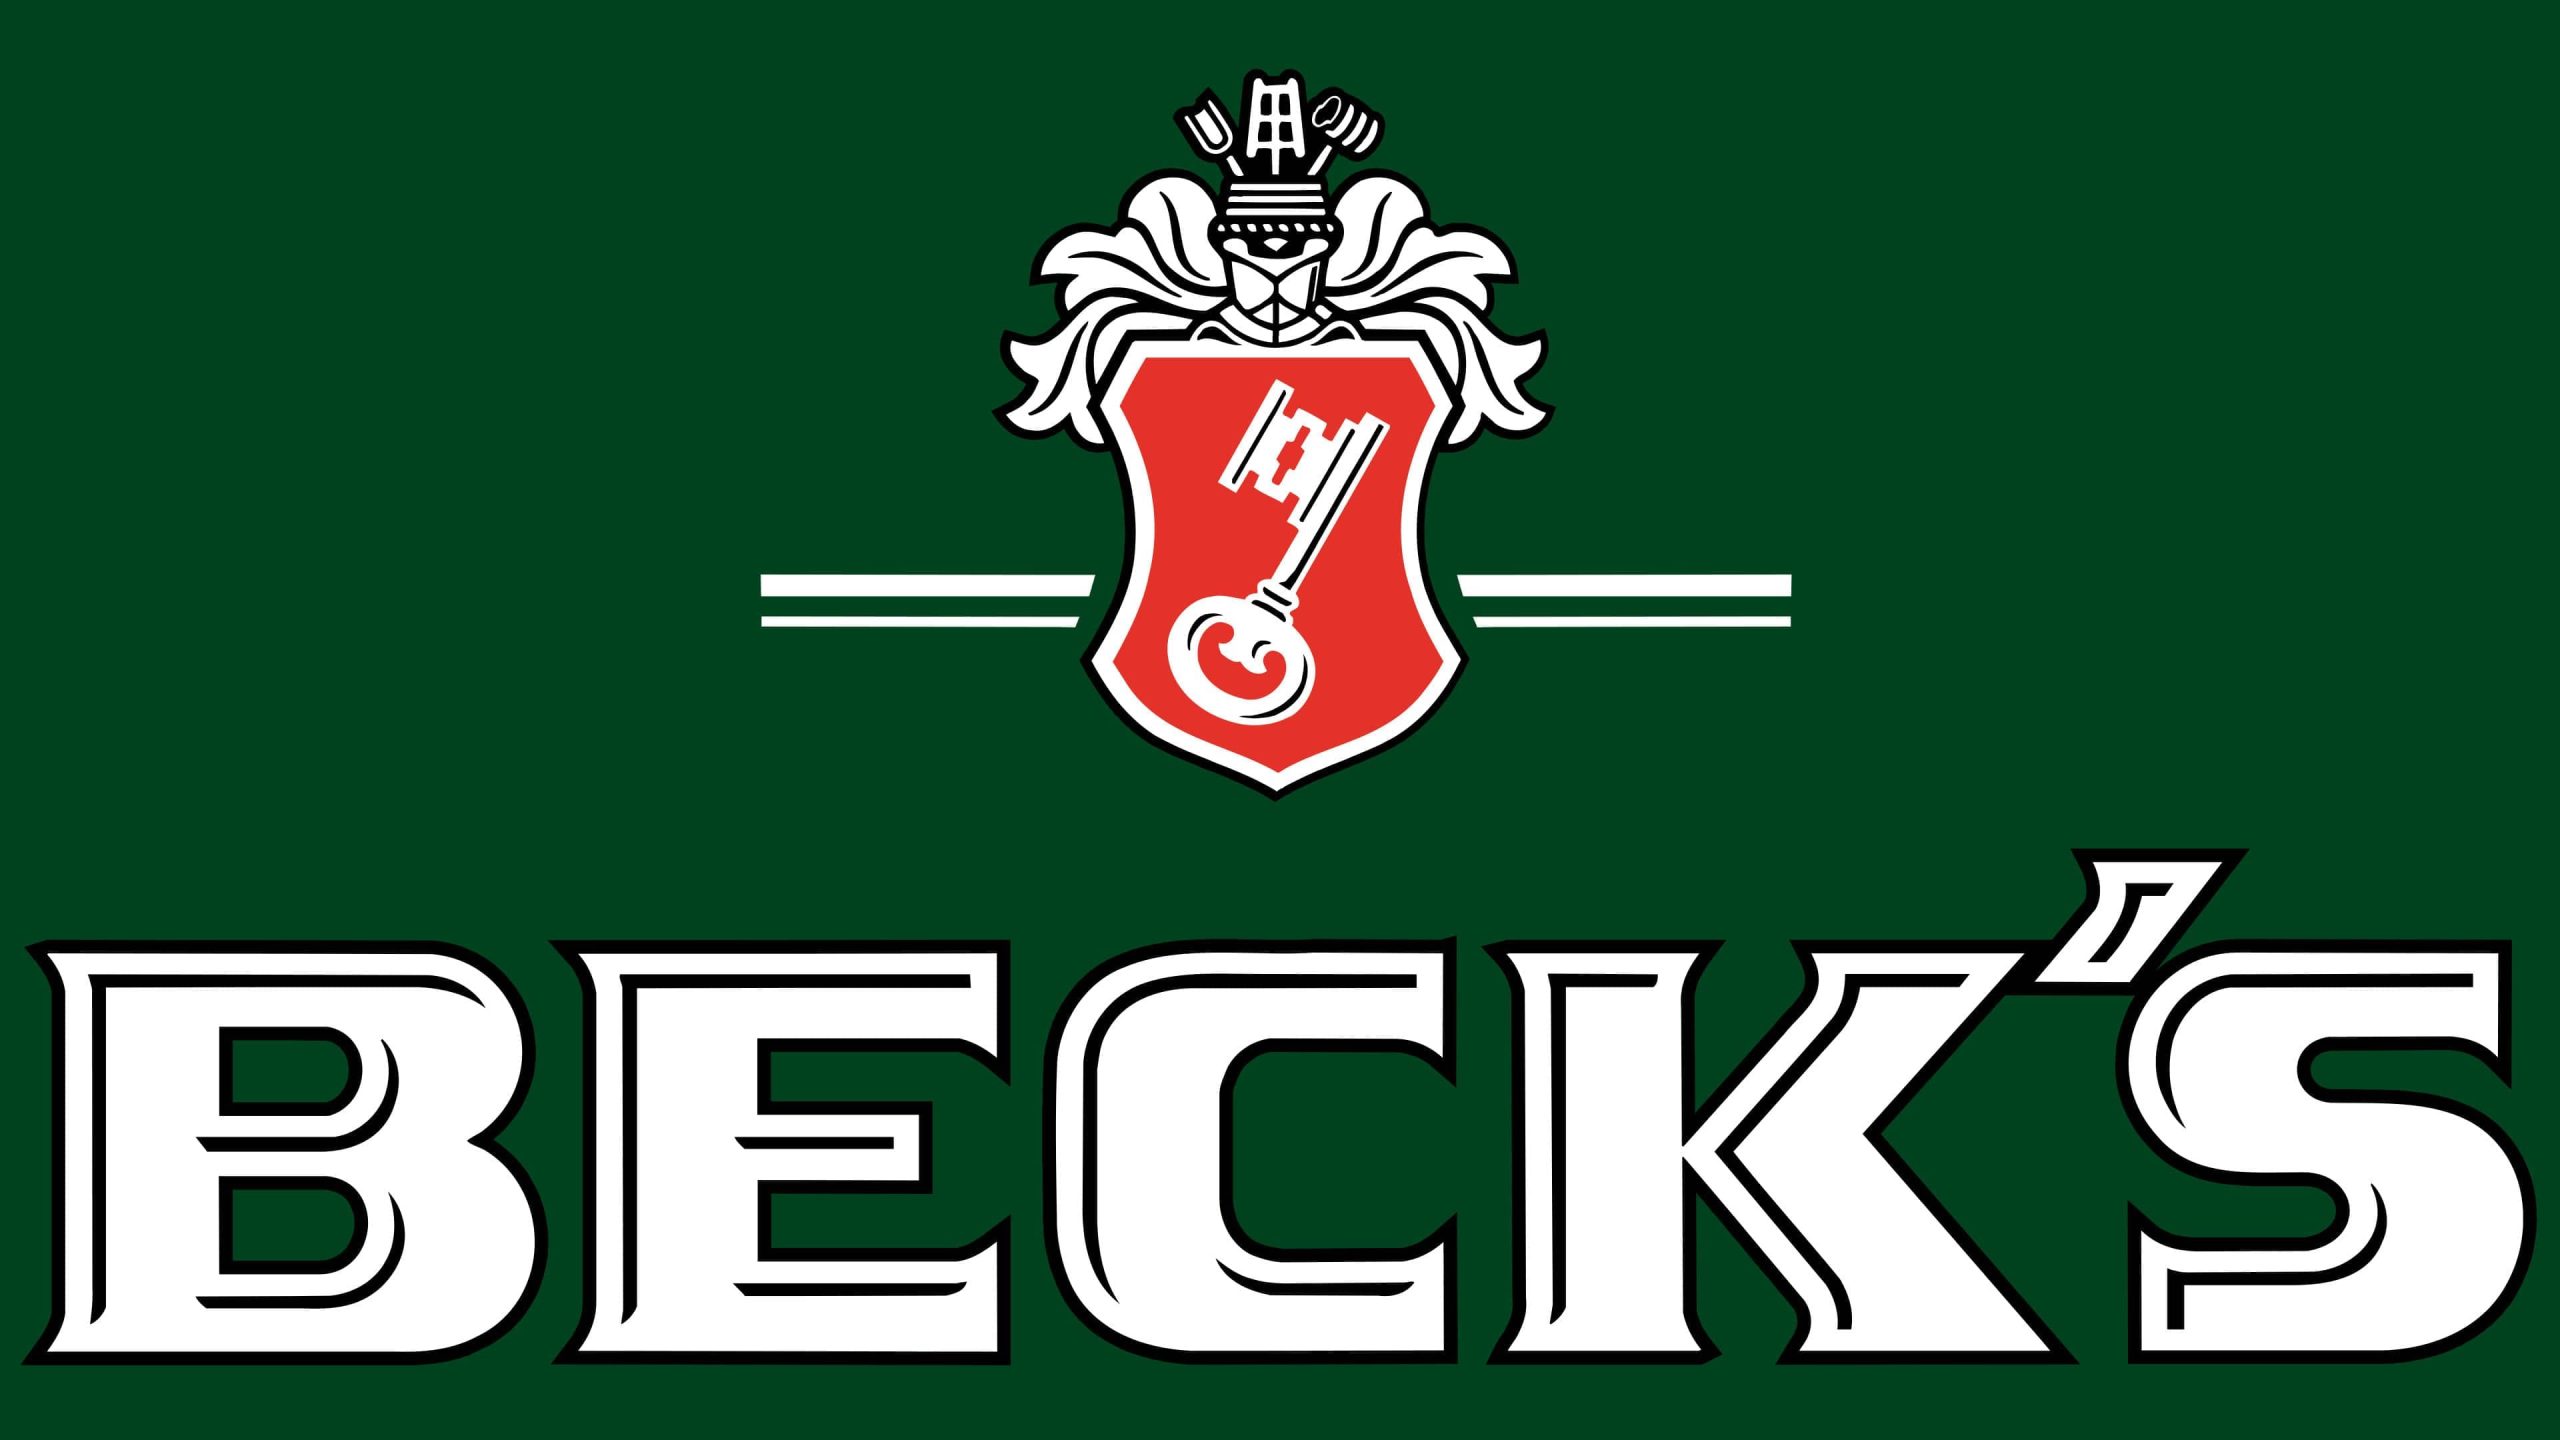 Becks-Symbol-scaled.jpg